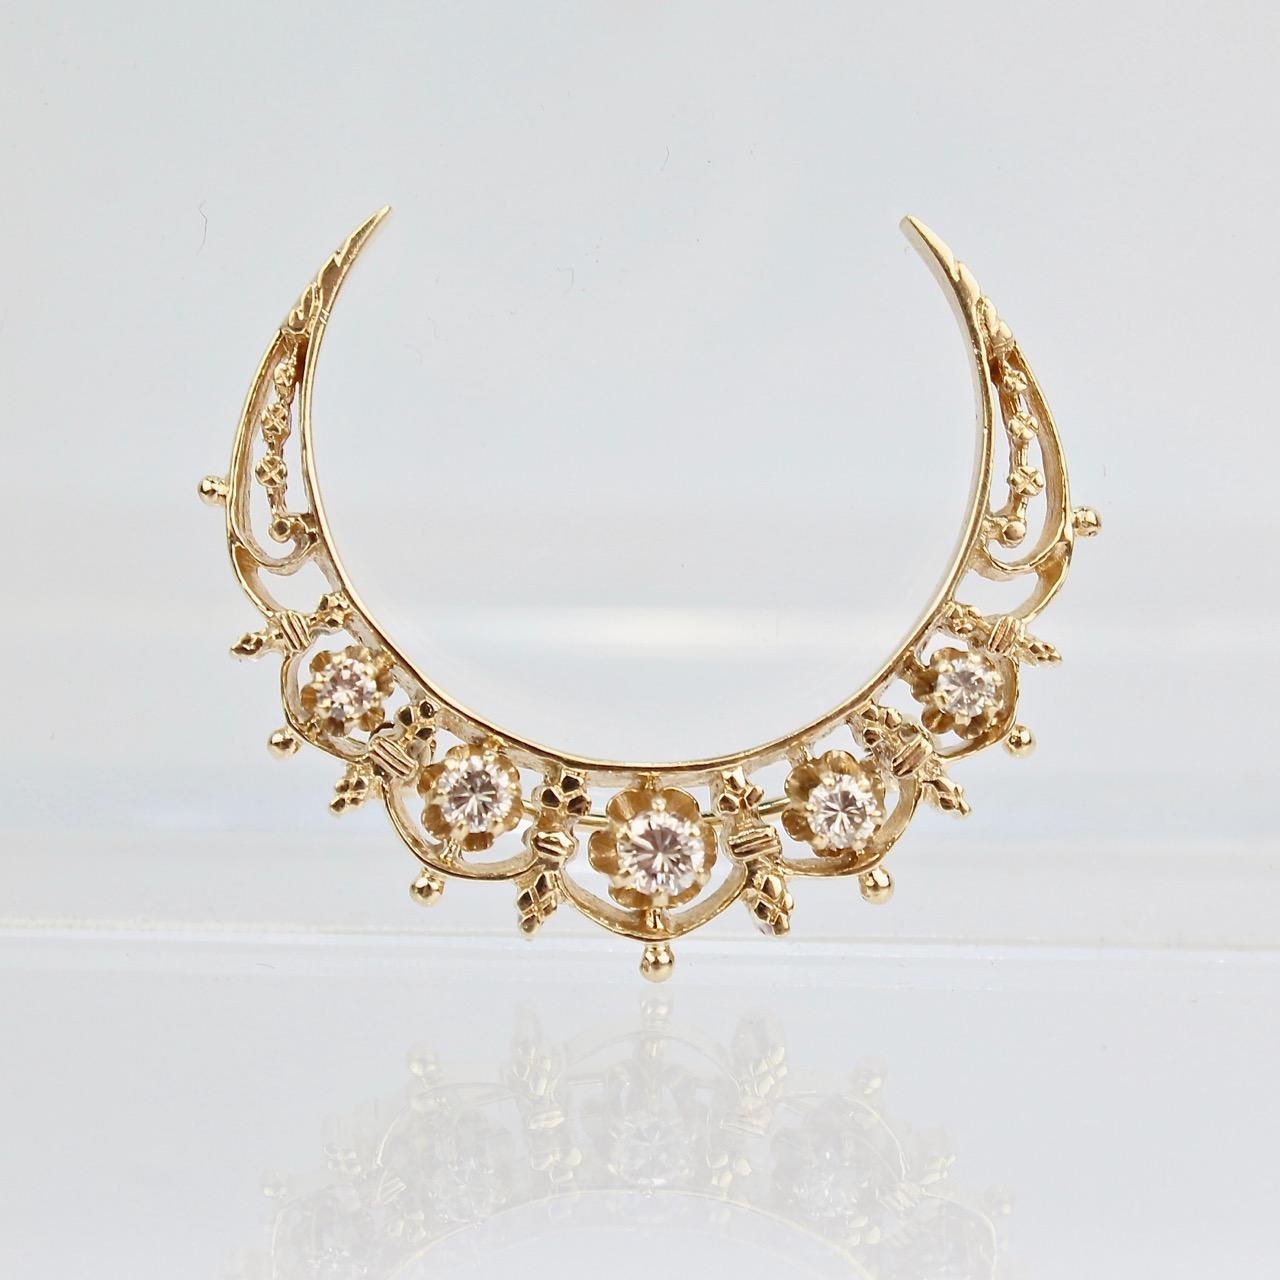 Antique Victorian 14 Karat Gold and Diamond Moon or Crescent Pendant / Brooch 1